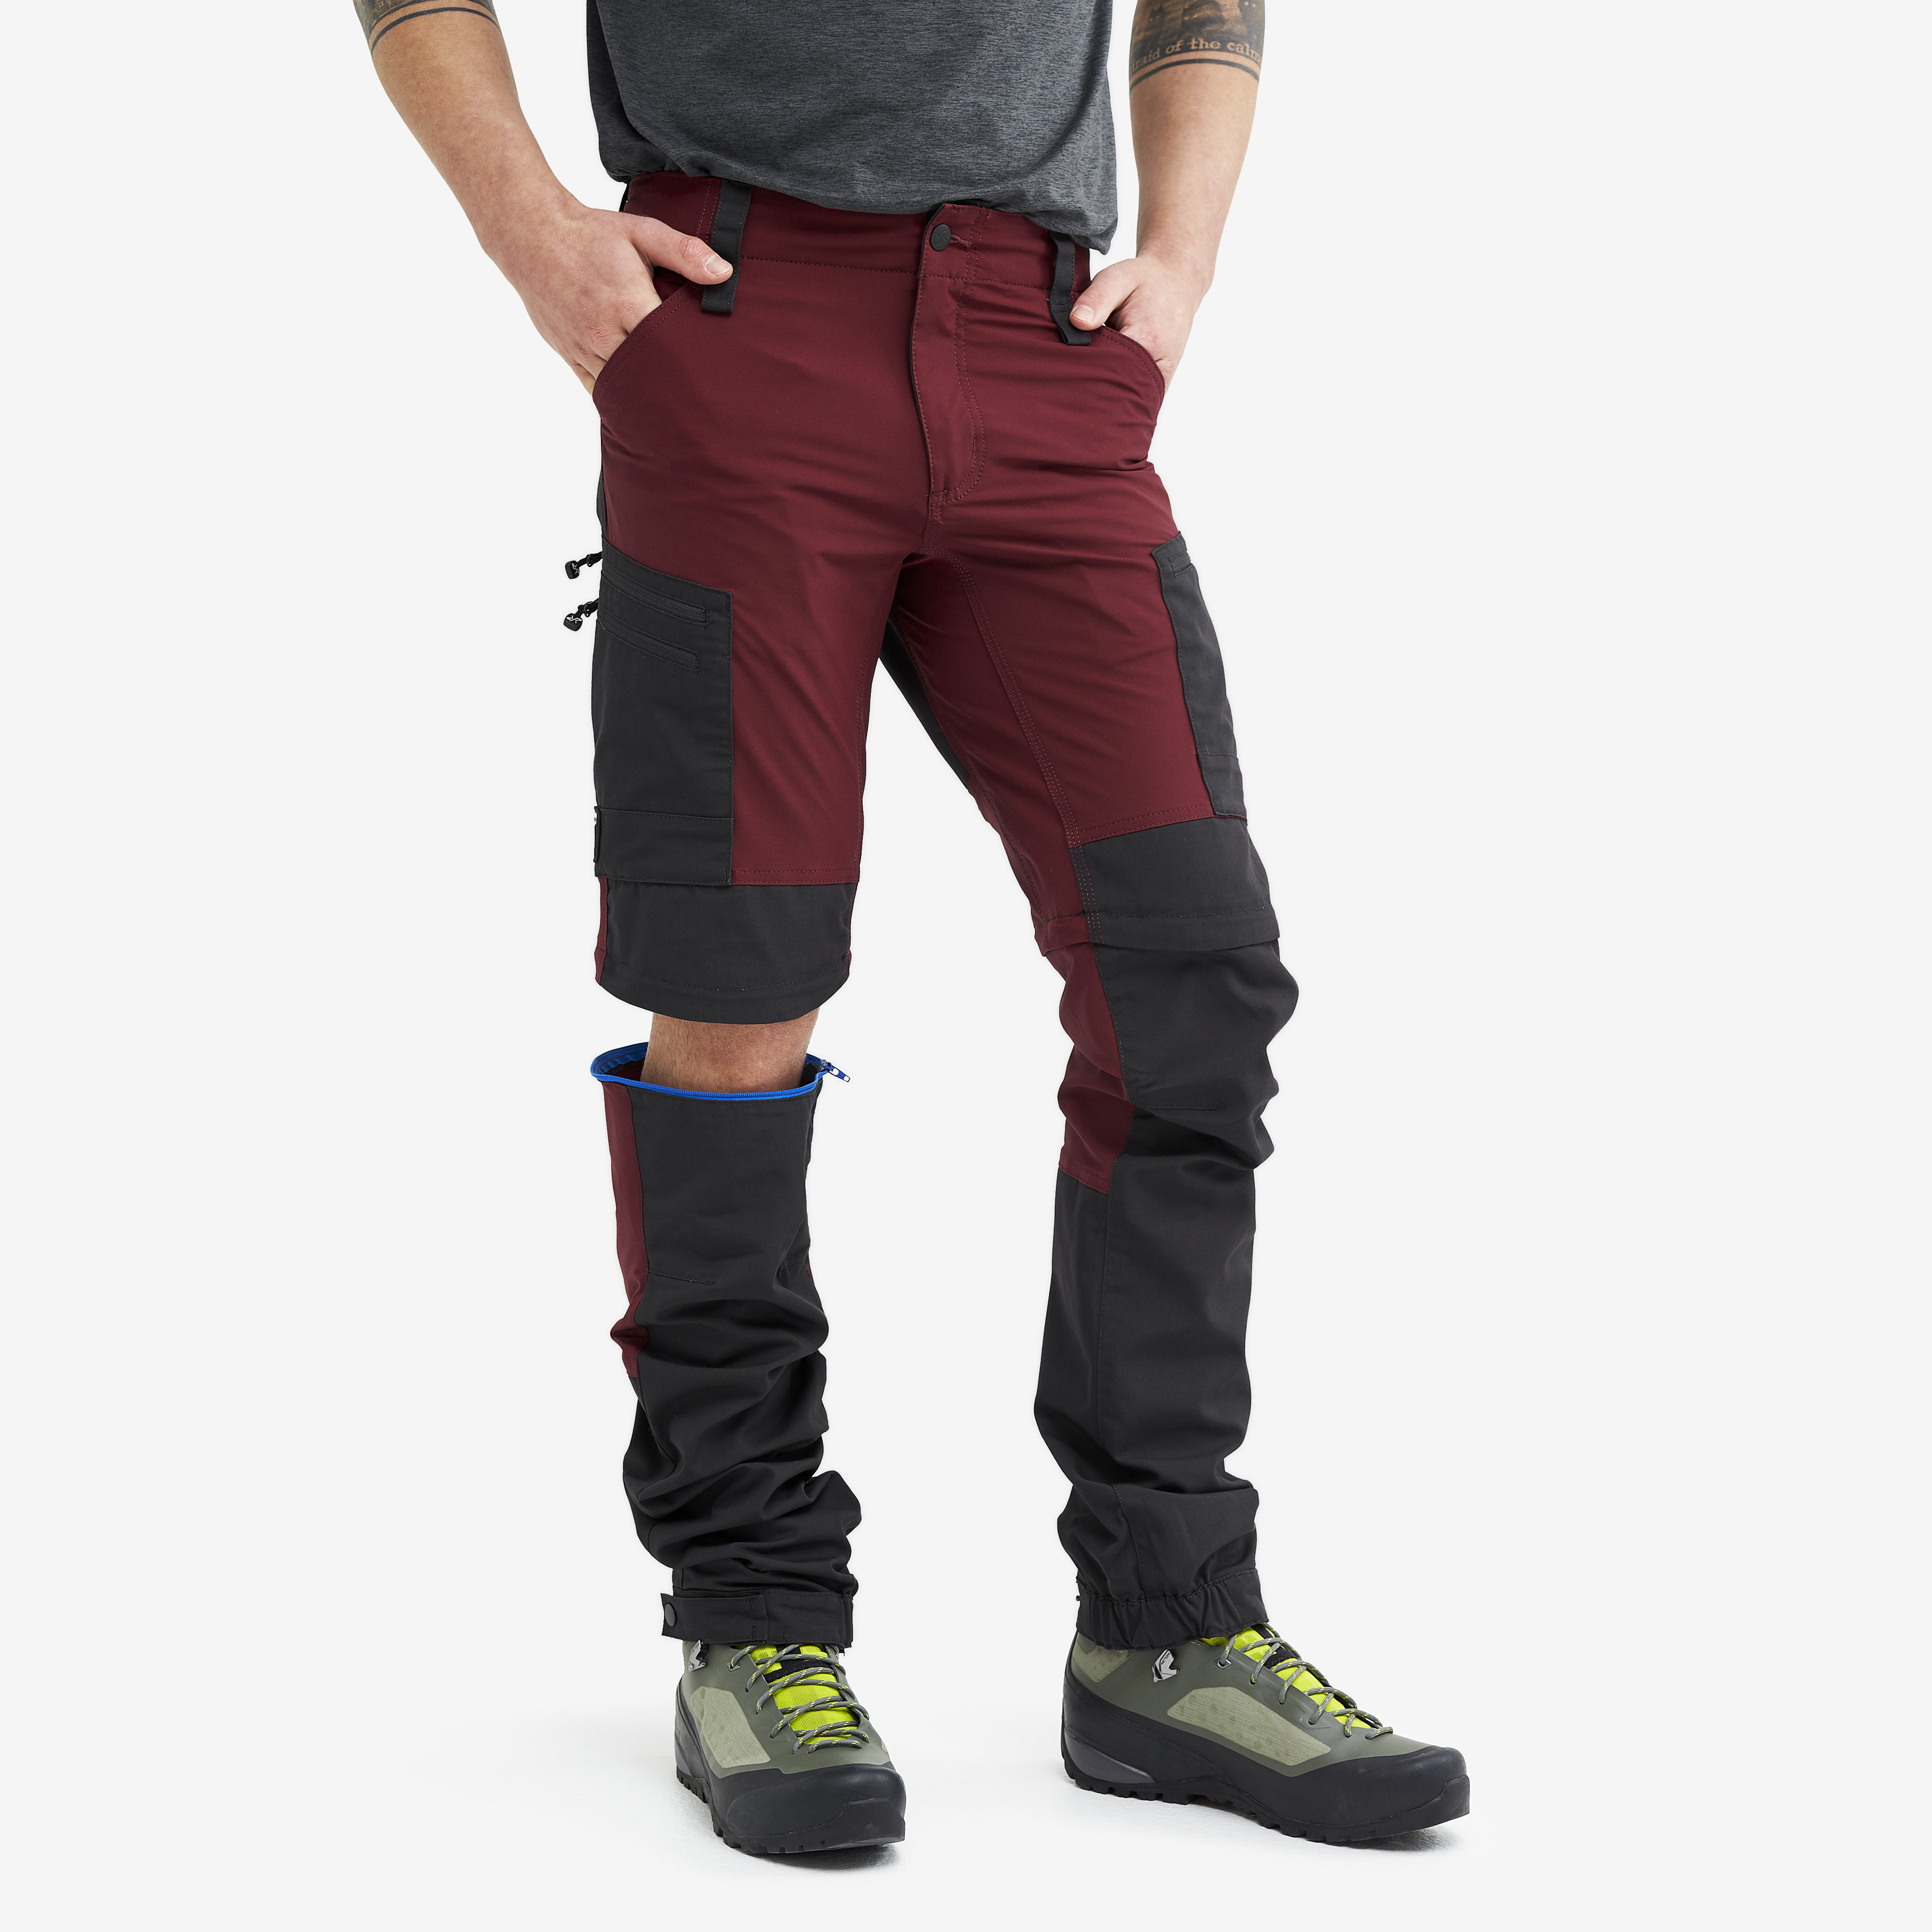 RVRC GP Pro Zip-off hiking trousers for men in dark red